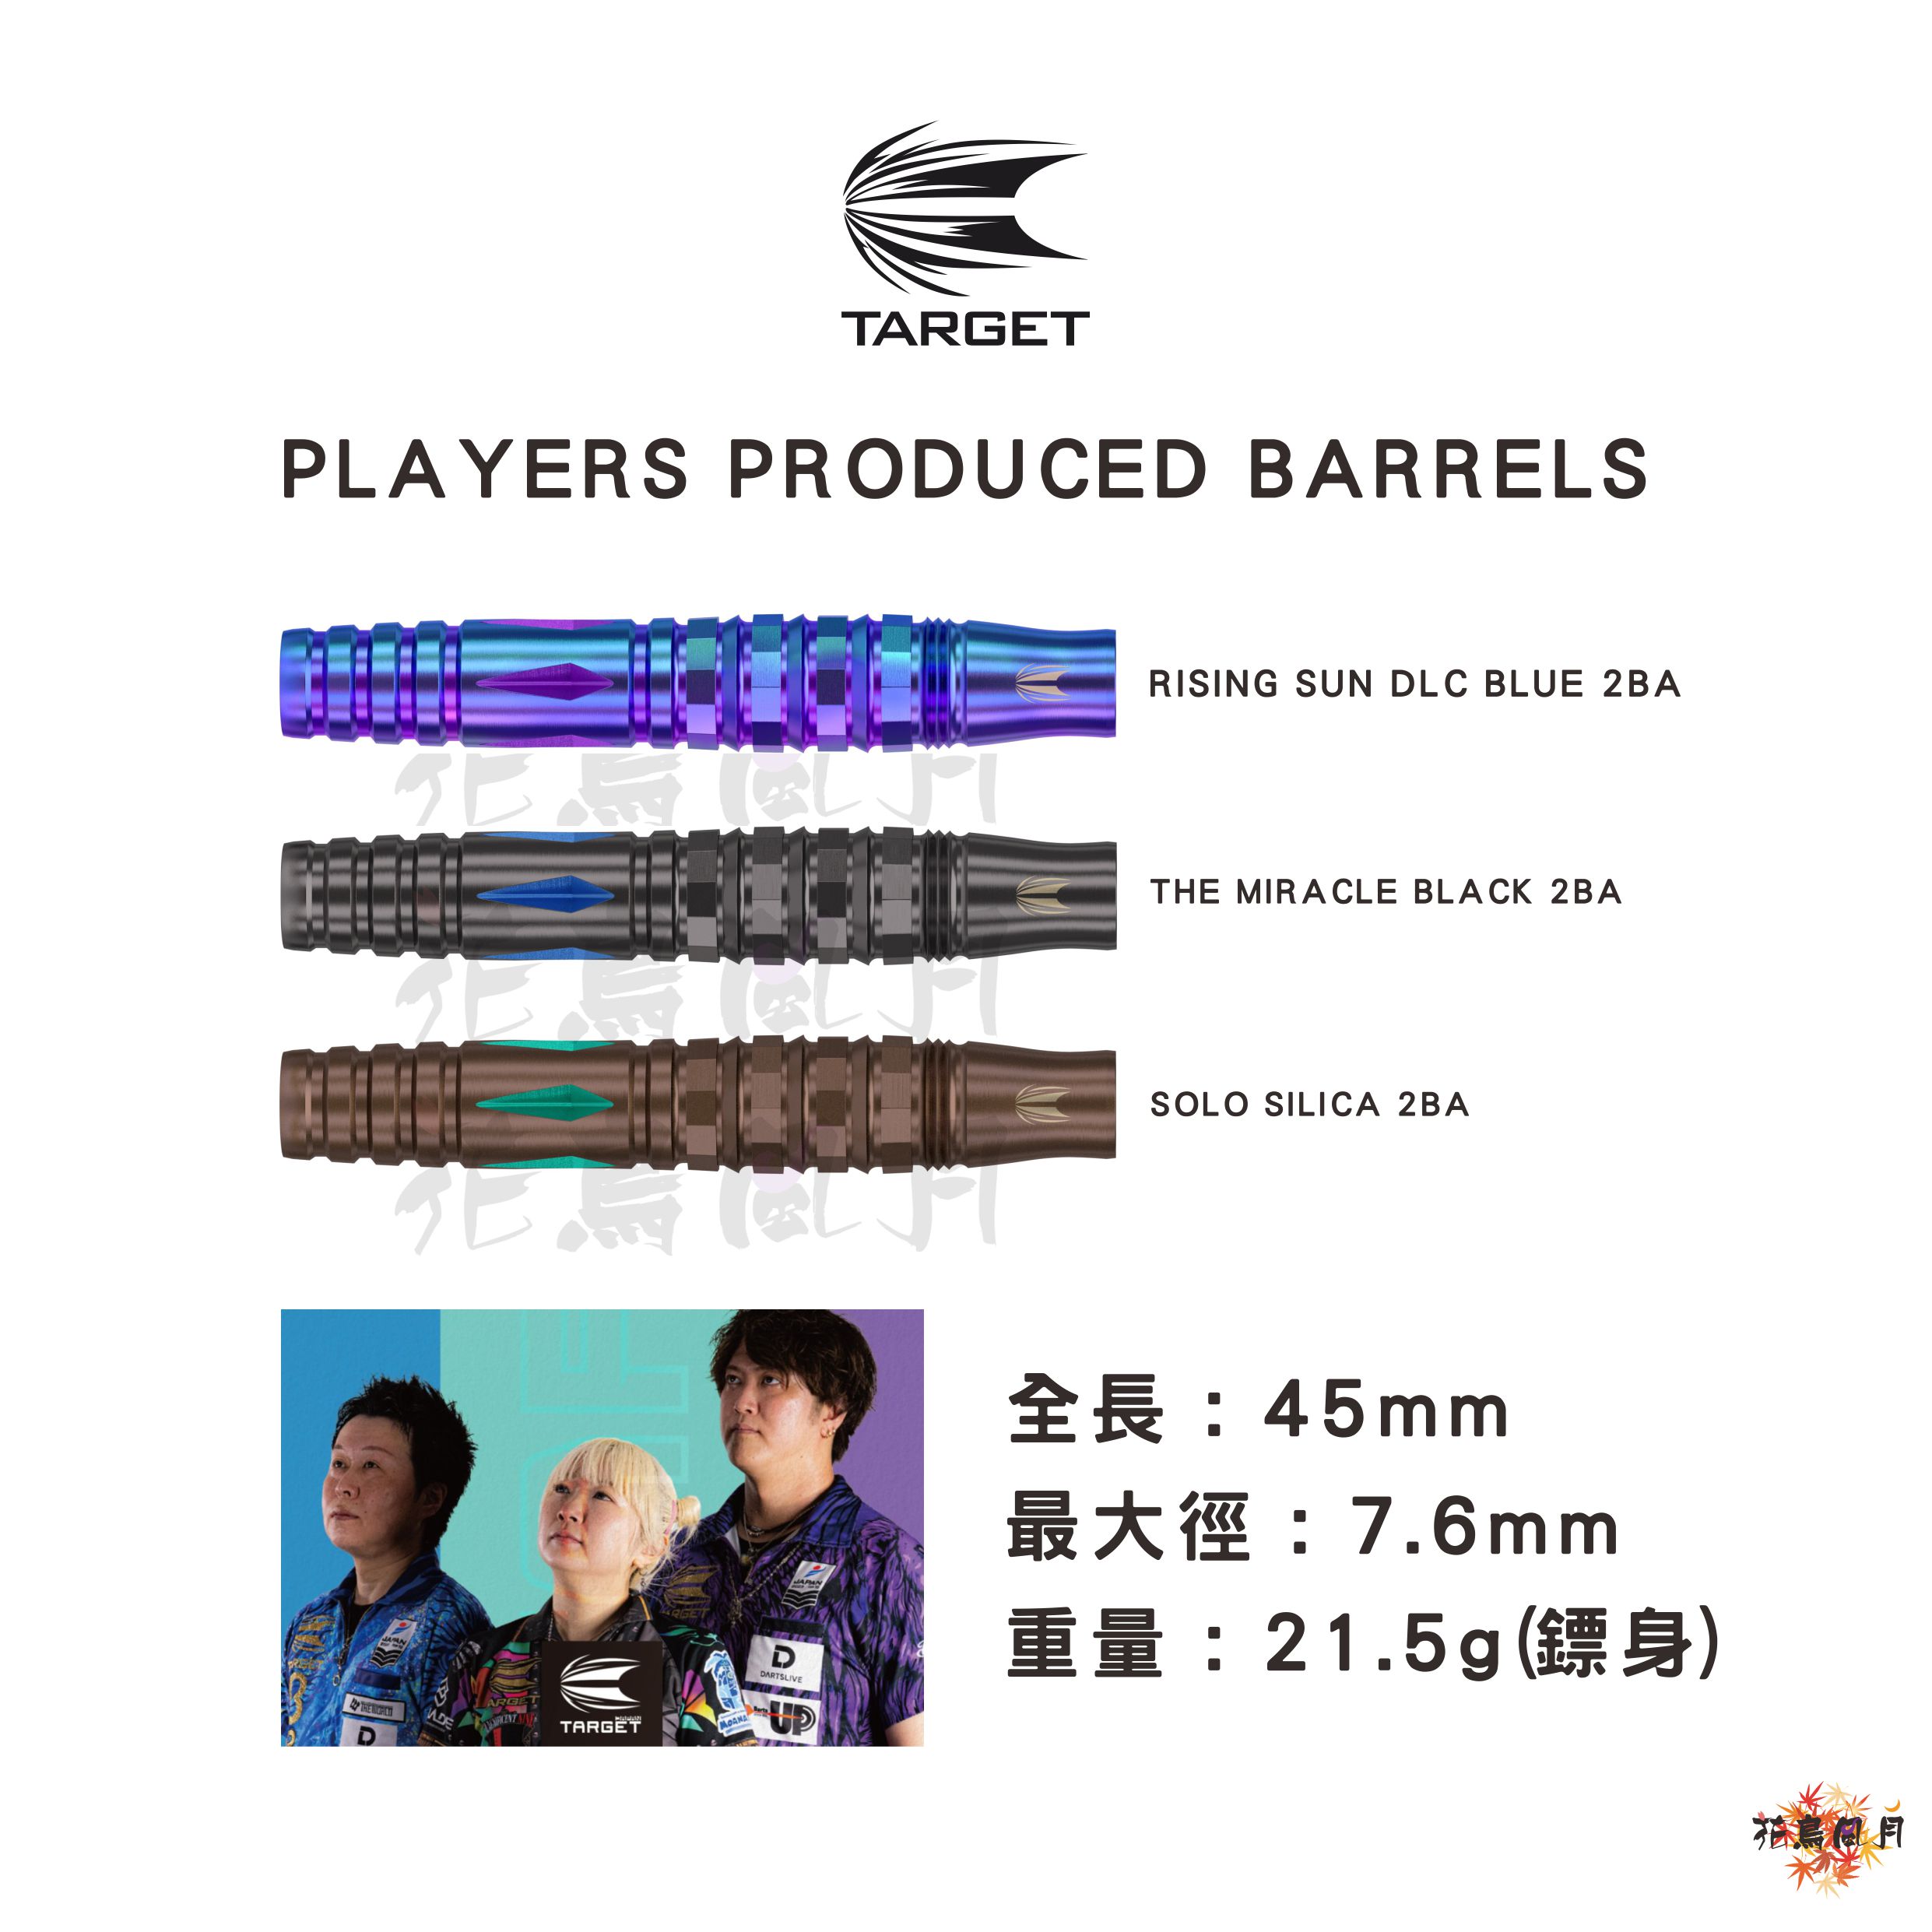 【PLAYERS-PRODUCED-BARRELS】.jpg